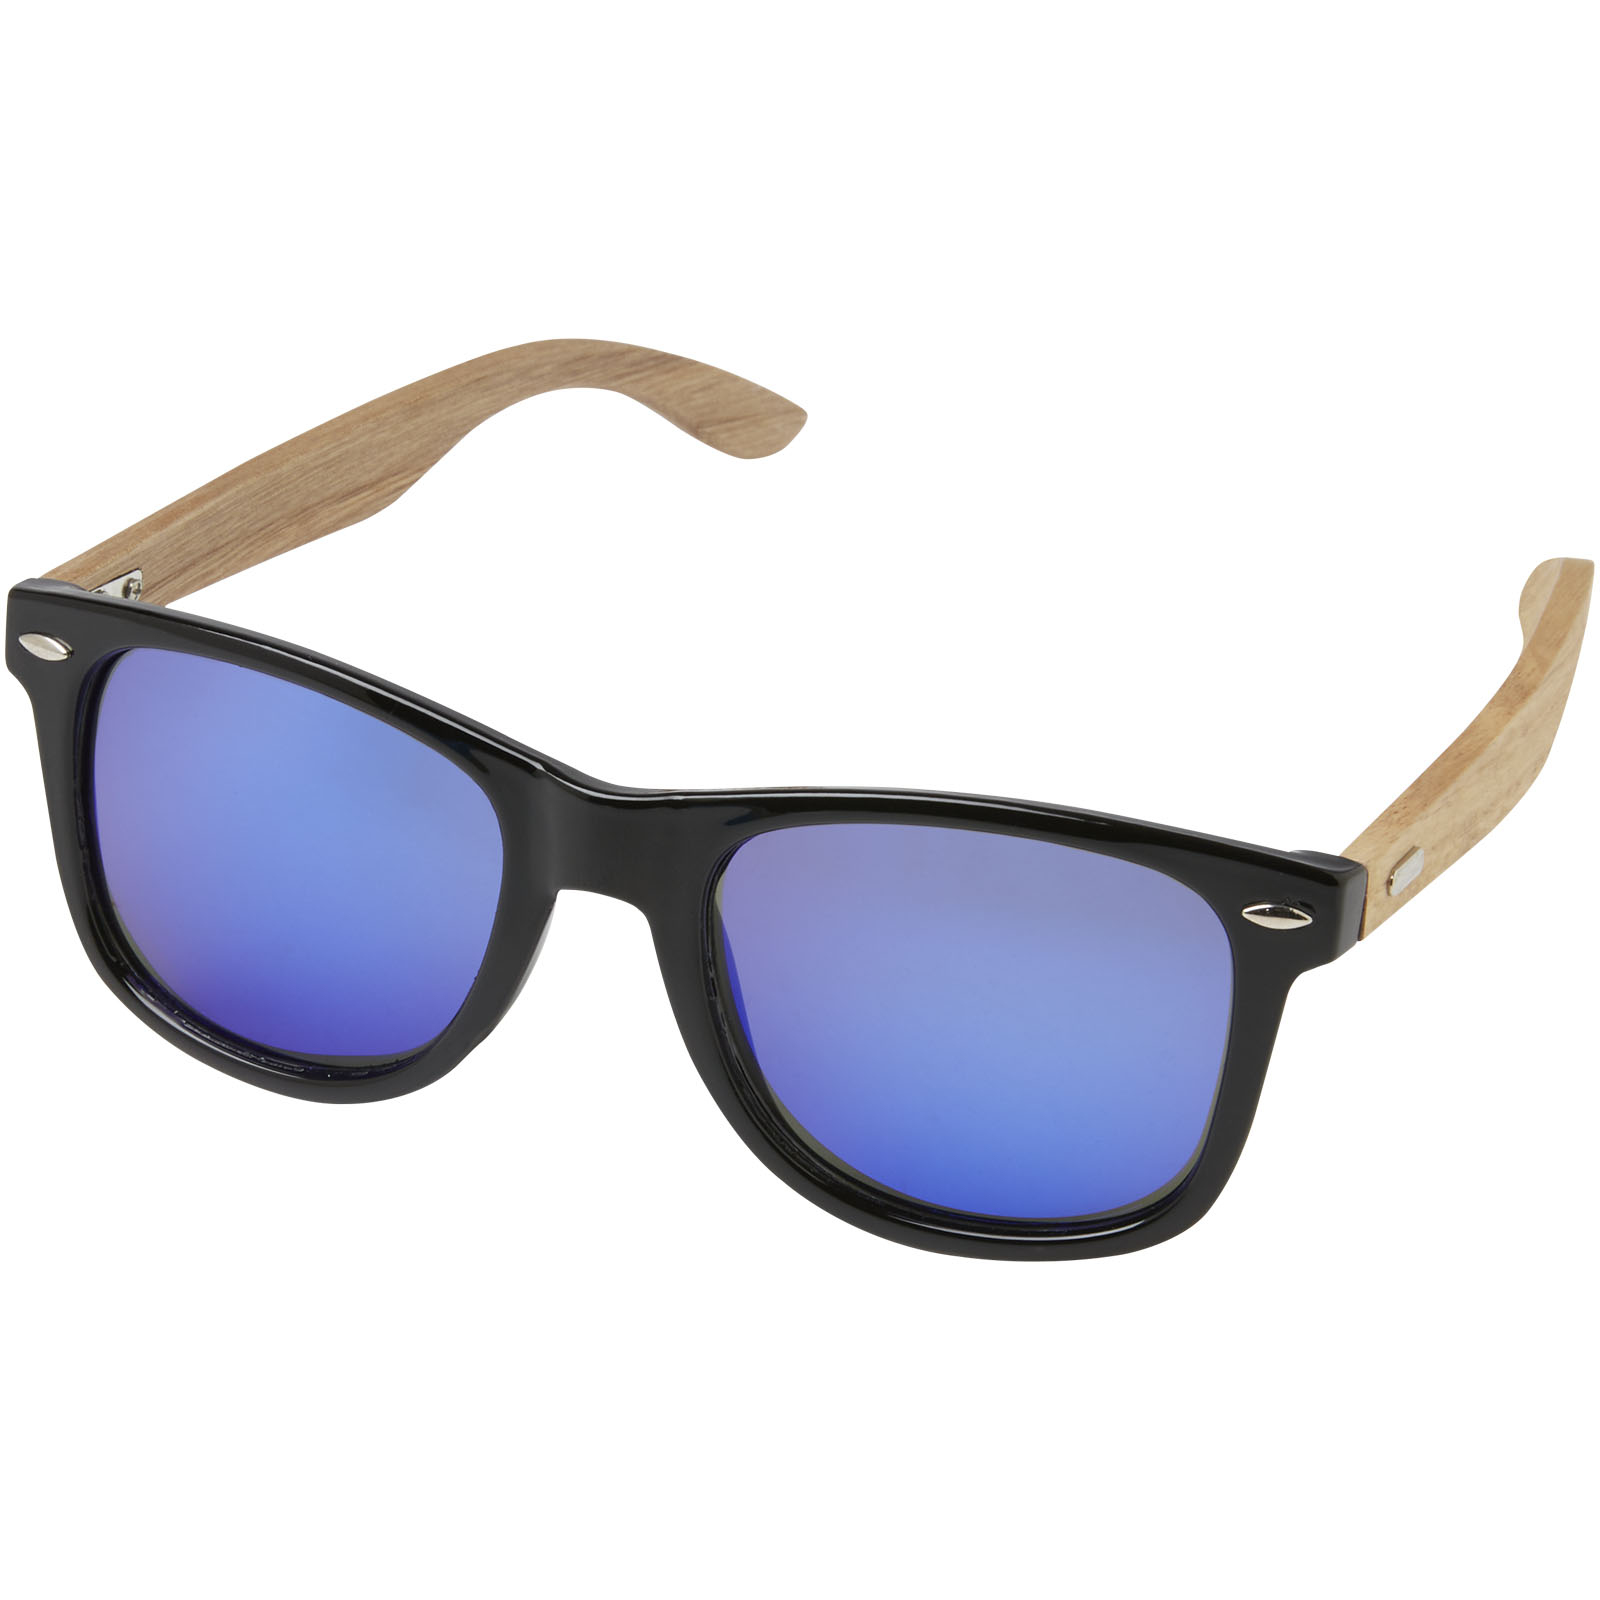 Advertising Sunglasses - Hiru rPET/wood mirrored polarized sunglasses in gift box